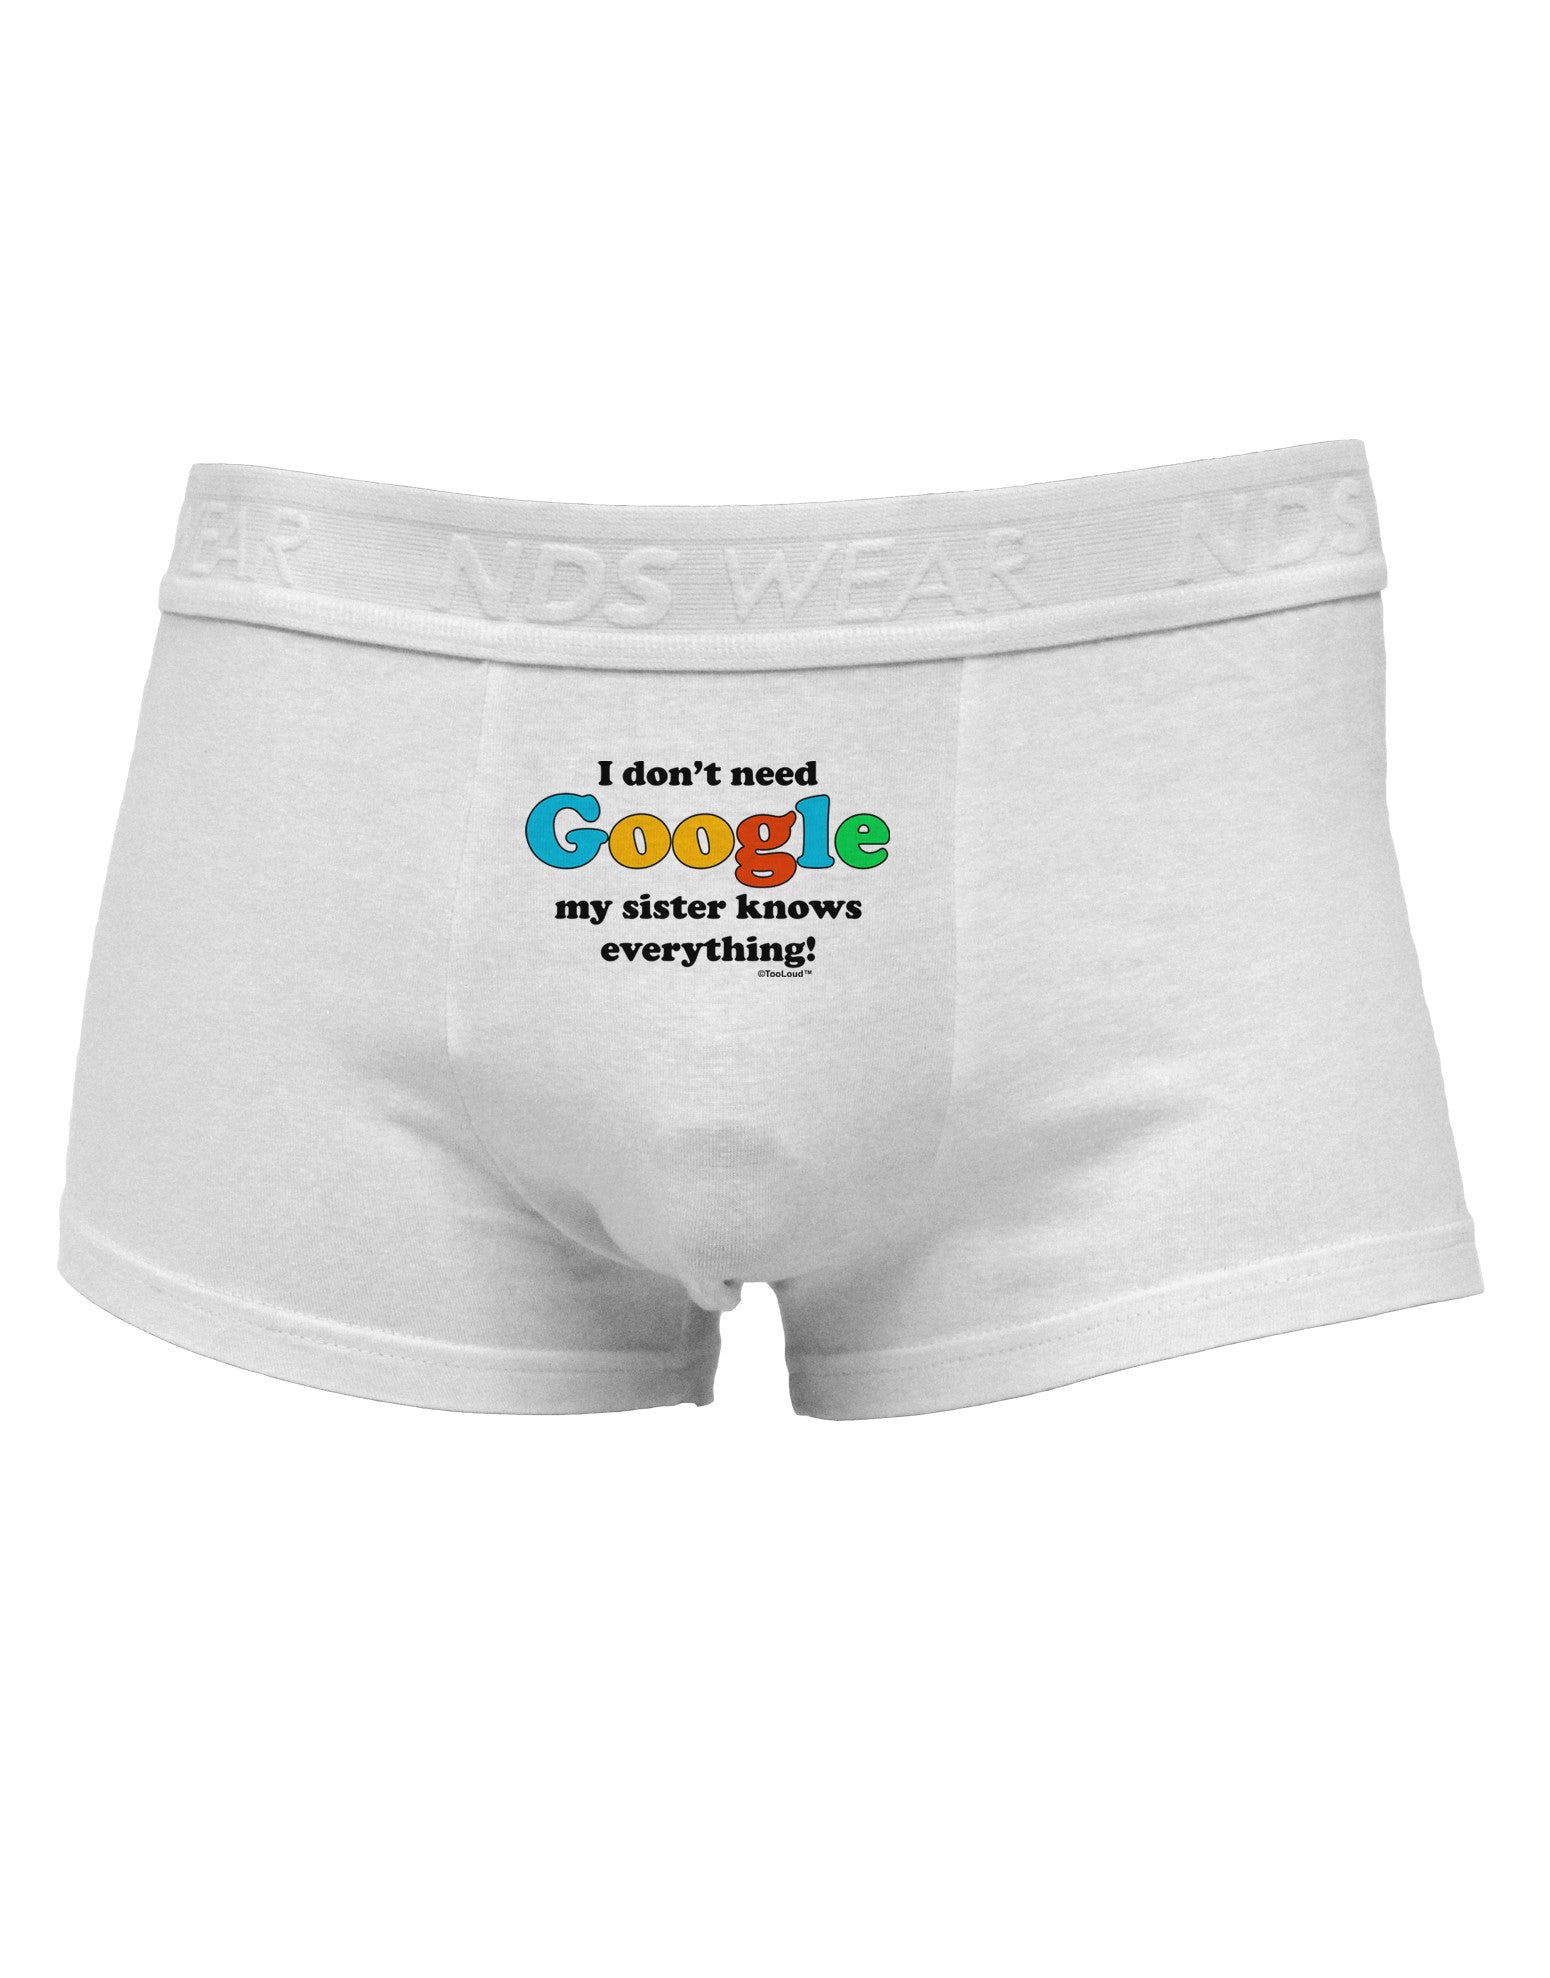 I Don't Need Google - Sister Mens Cotton Trunk Underwear